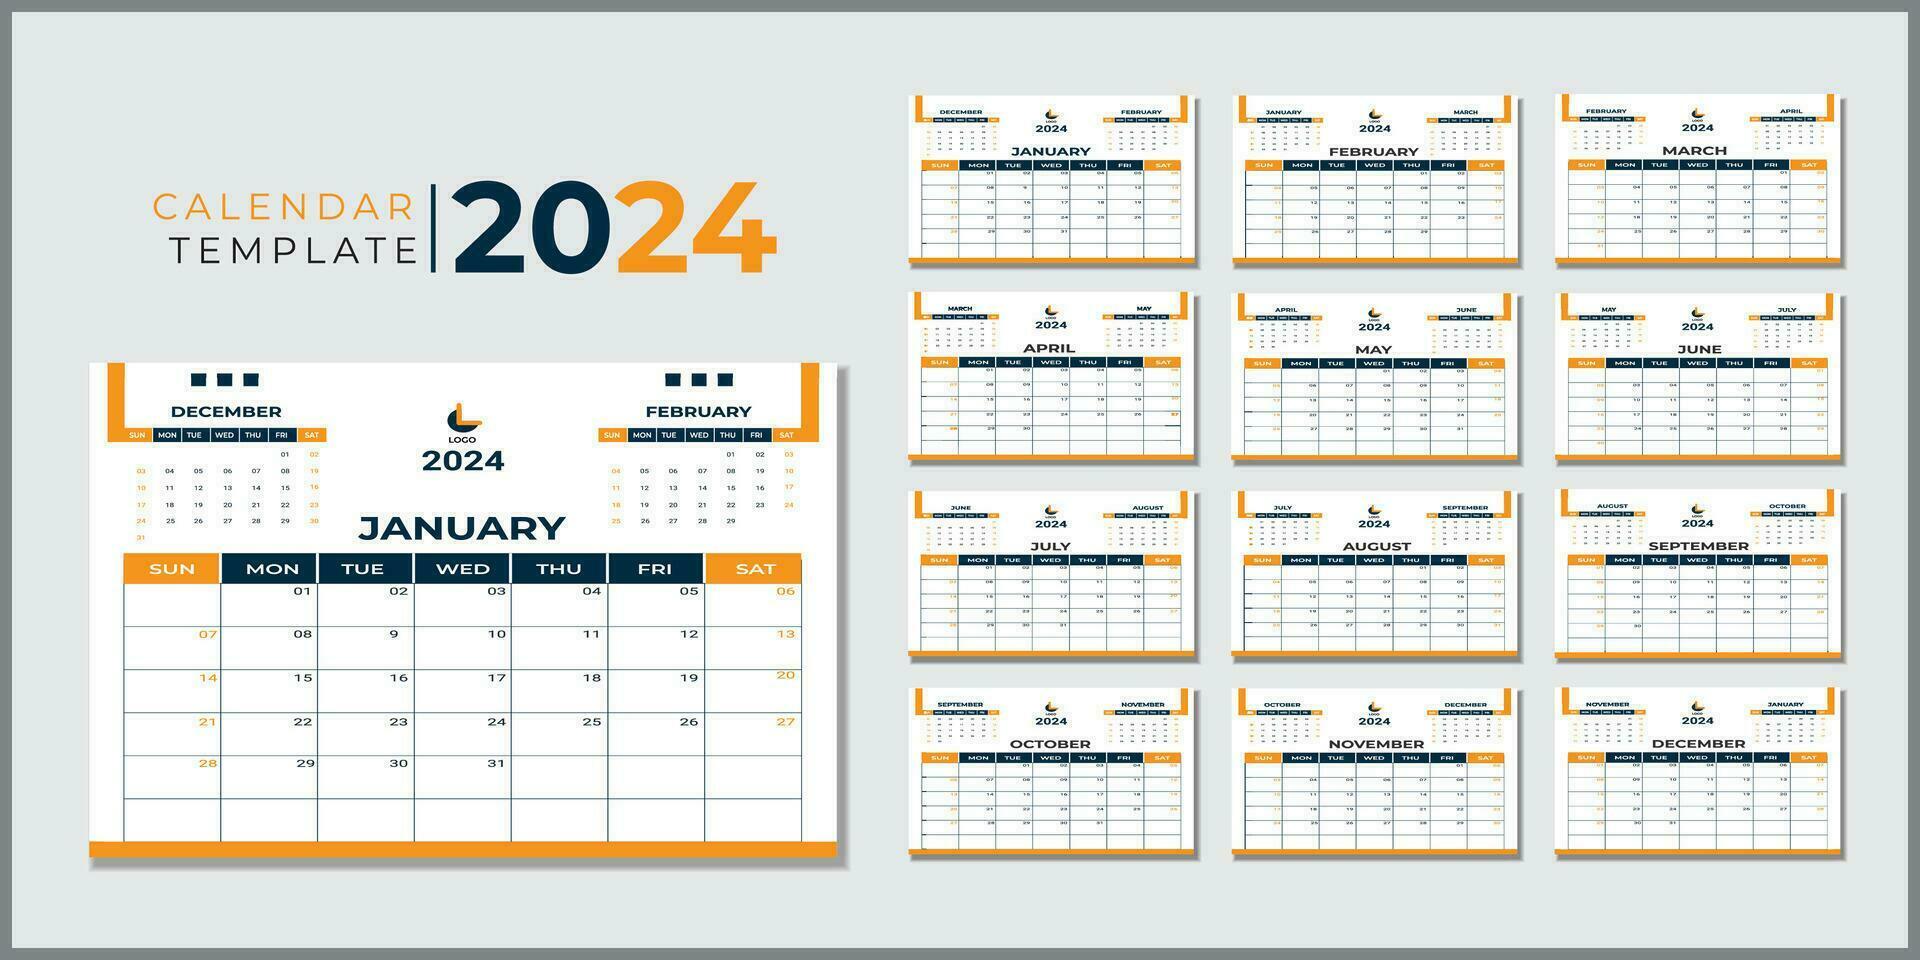 mensual calendario modelo para 2024 año. pared calendario en un minimalista estilo. calendario 2024 semana comienzo domingo corporativo diseño planificador modelo. vector